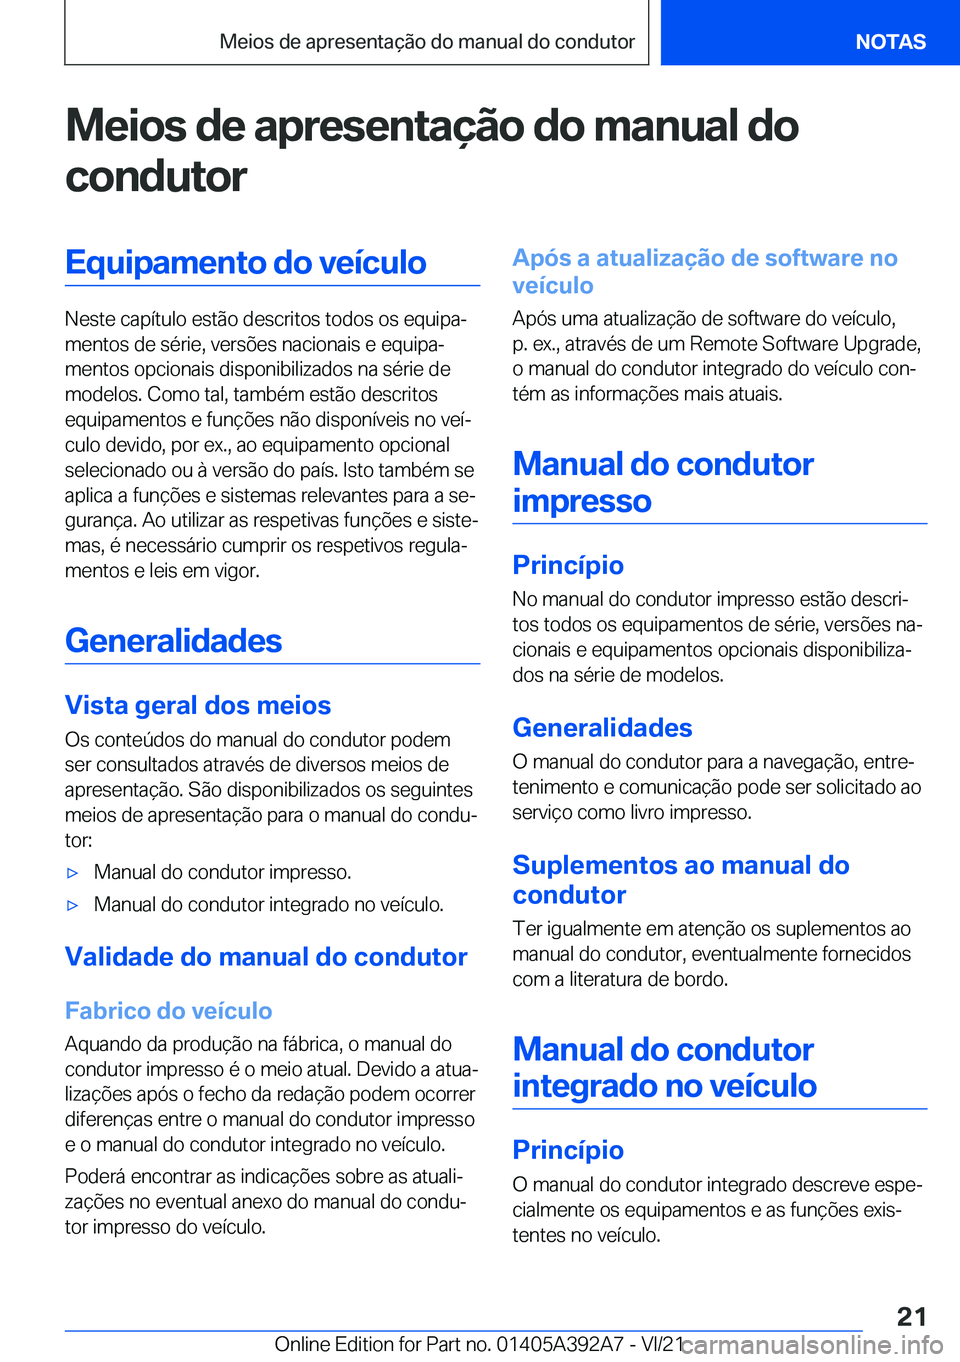 BMW 4 SERIES 2022  Manual do condutor (in Portuguese) �M�e�i�o�s��d�e��a�p�r�e�s�e�n�t�a�